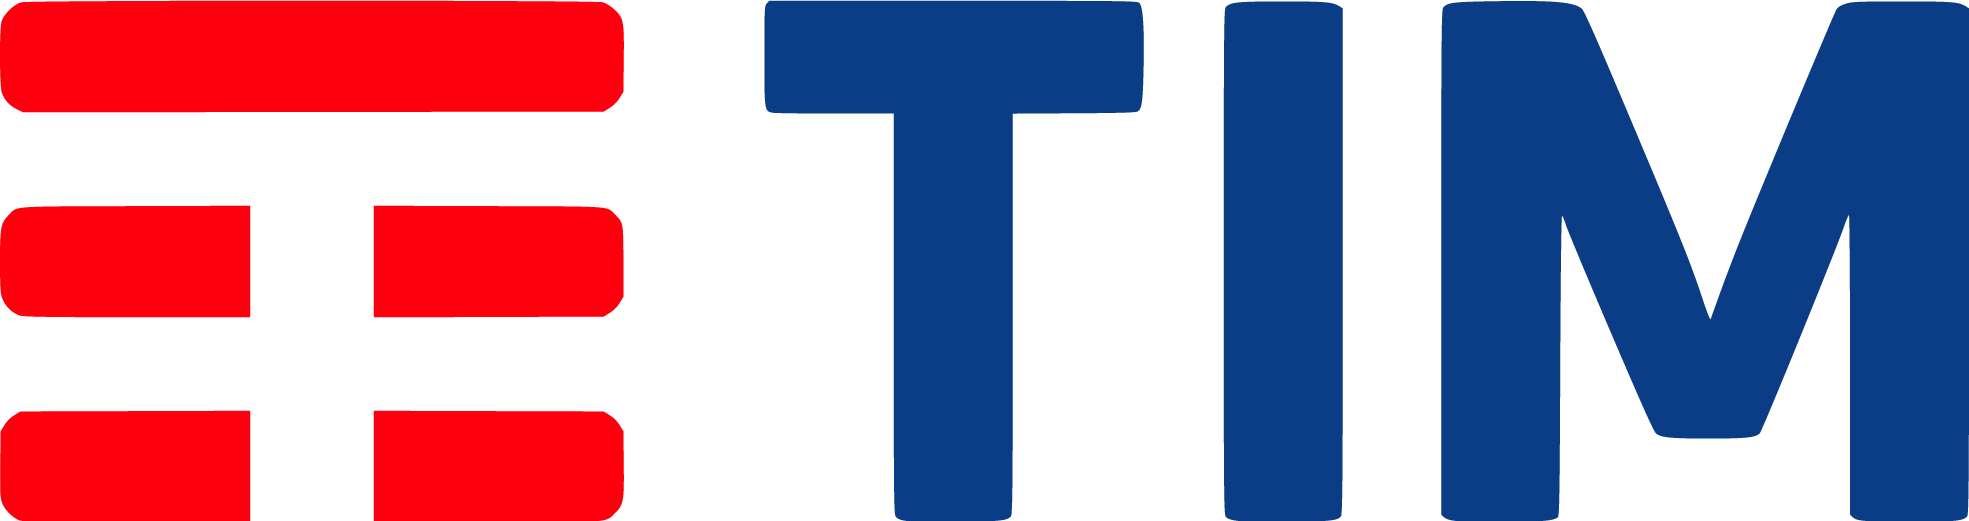 Telecom Italia Spa - Logo Tim (1969x521)